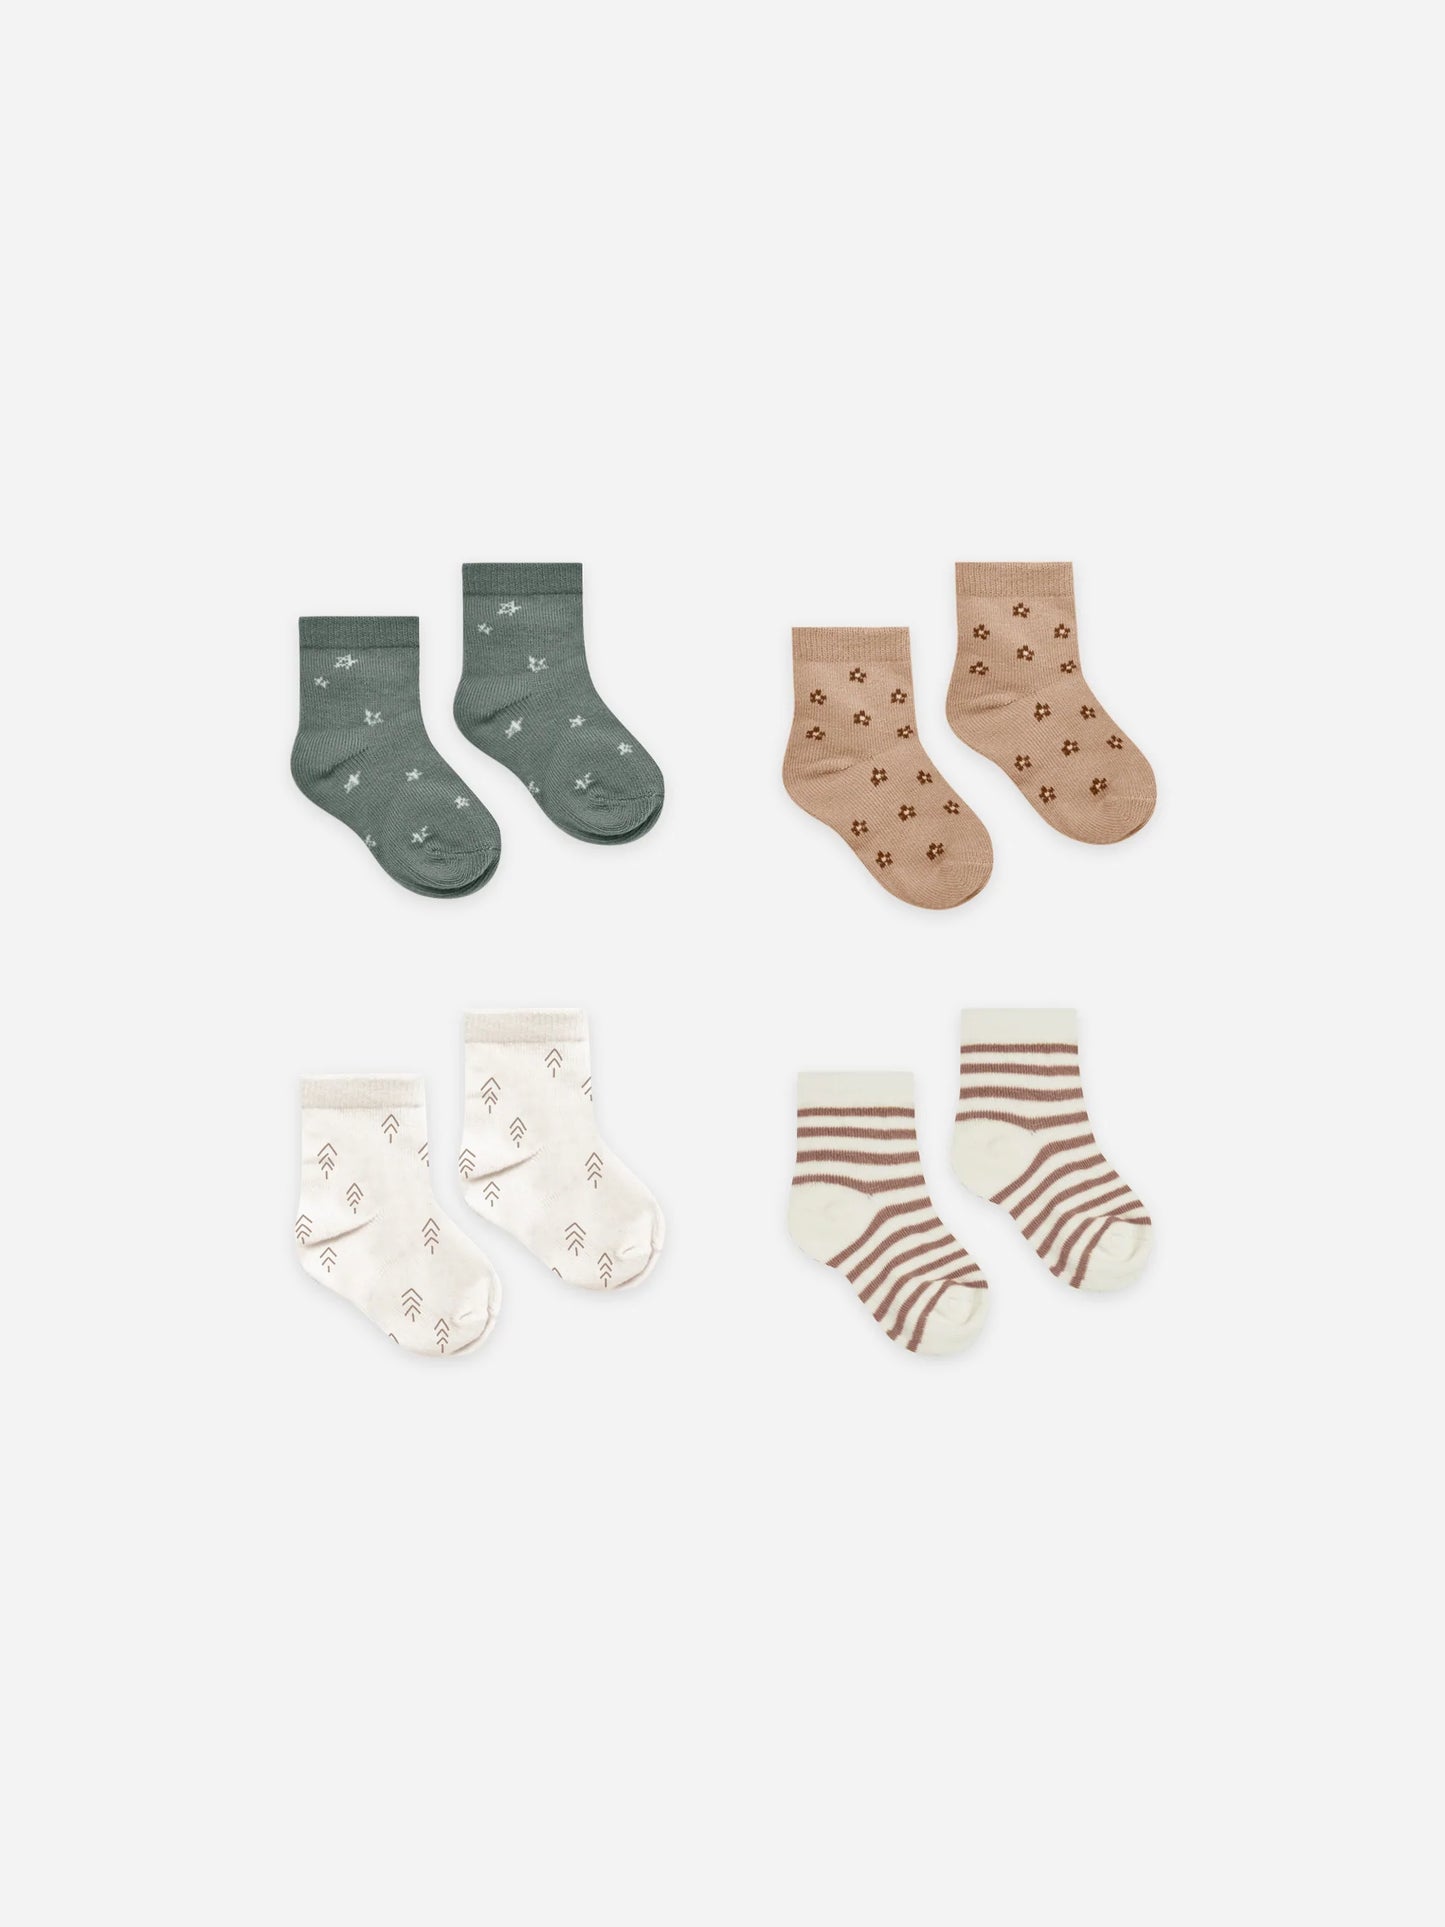 Printed Socks | Cocoa Stripe, Stars, Trees, Ditsy